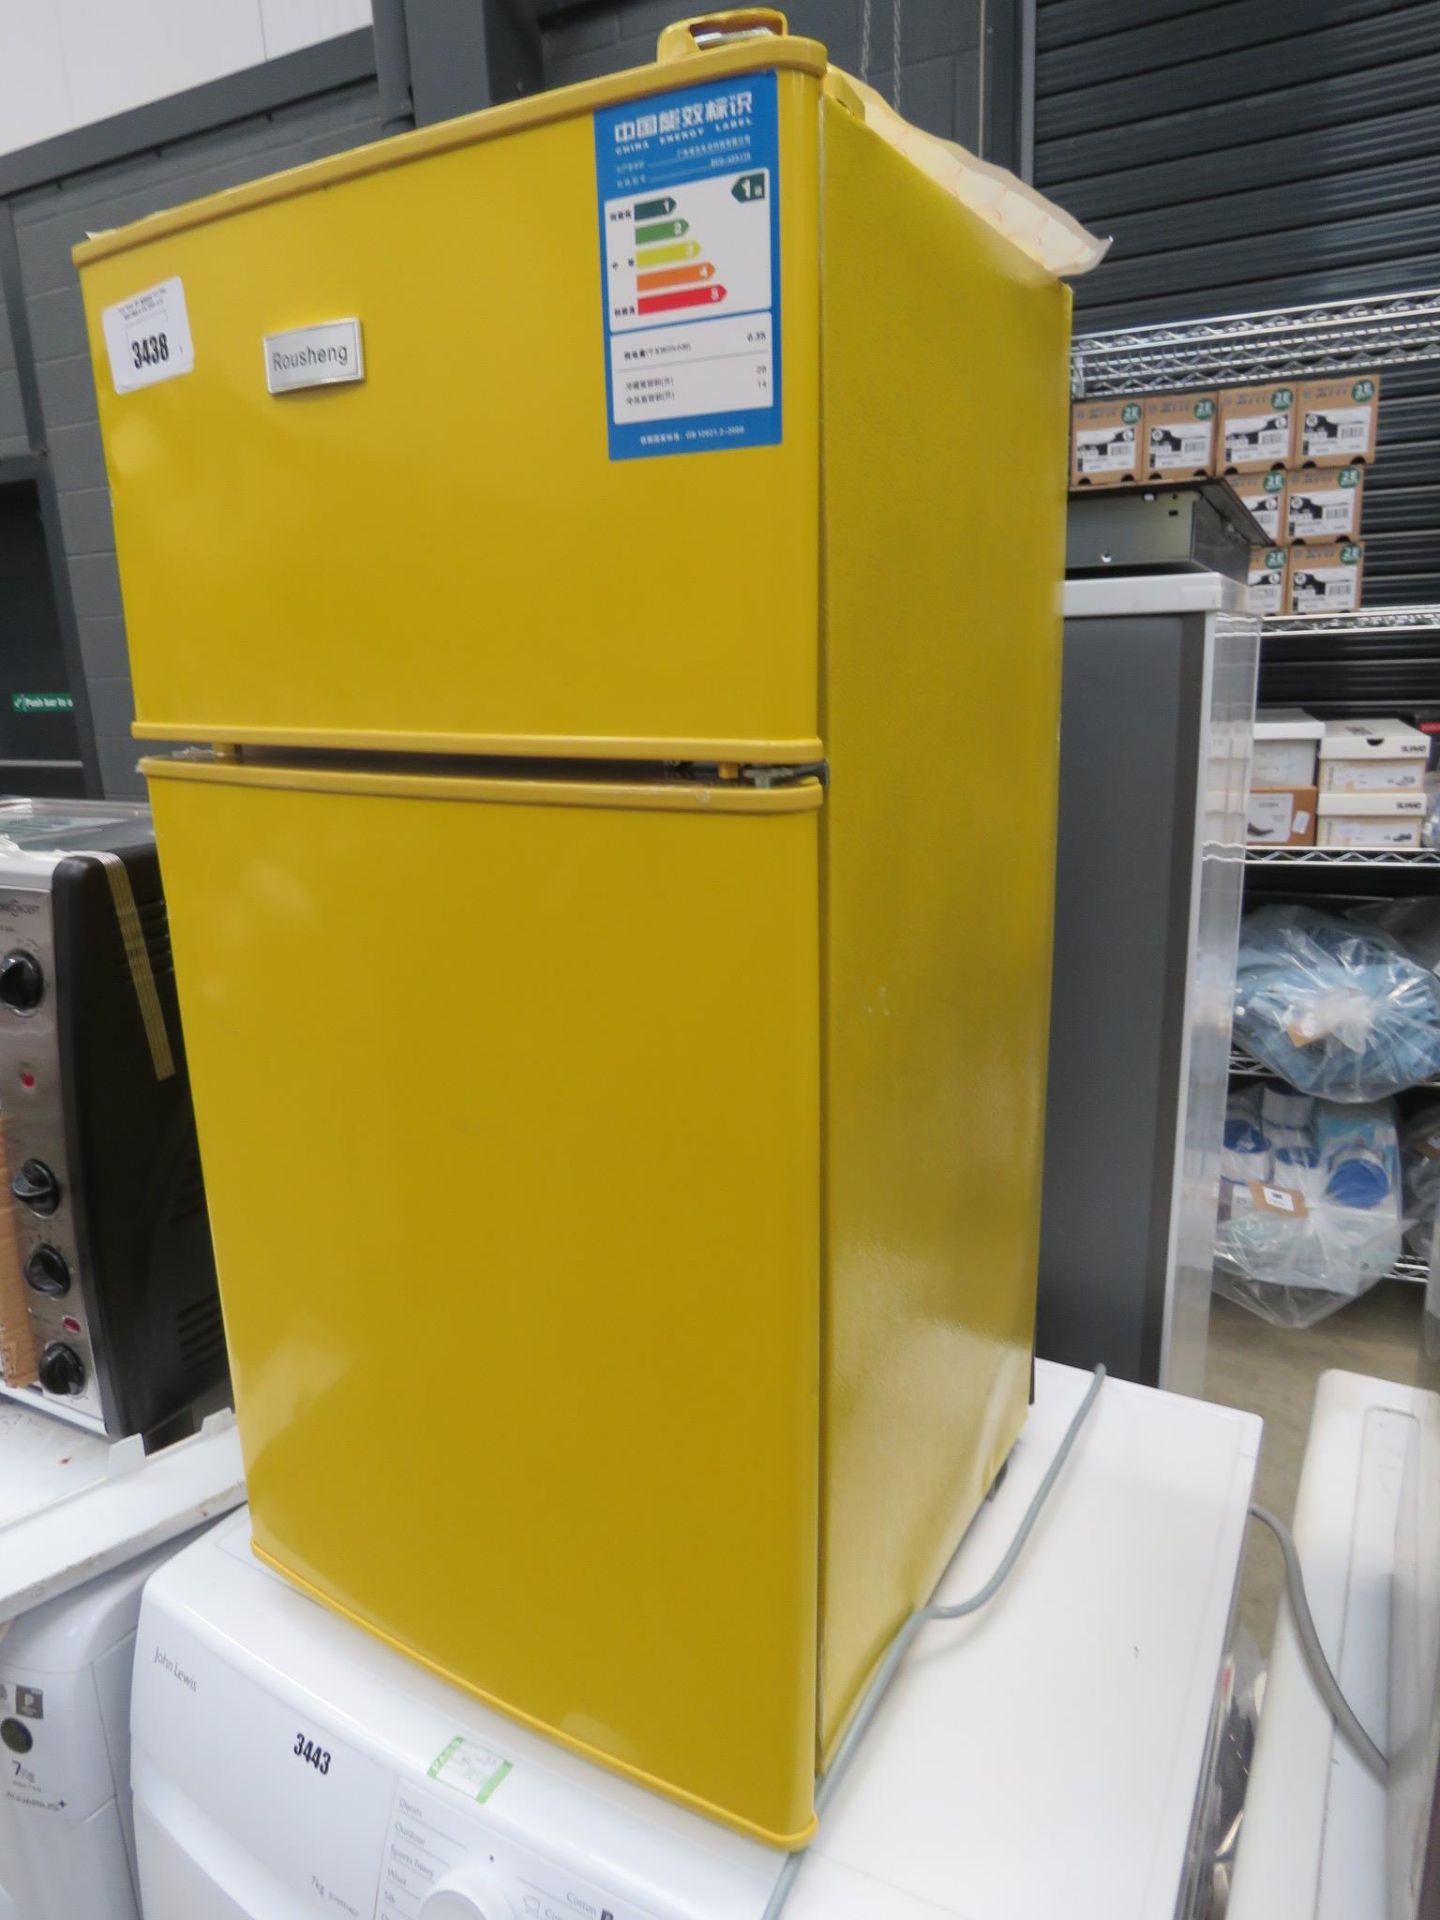 Small Rousheng yellow fridge freezer